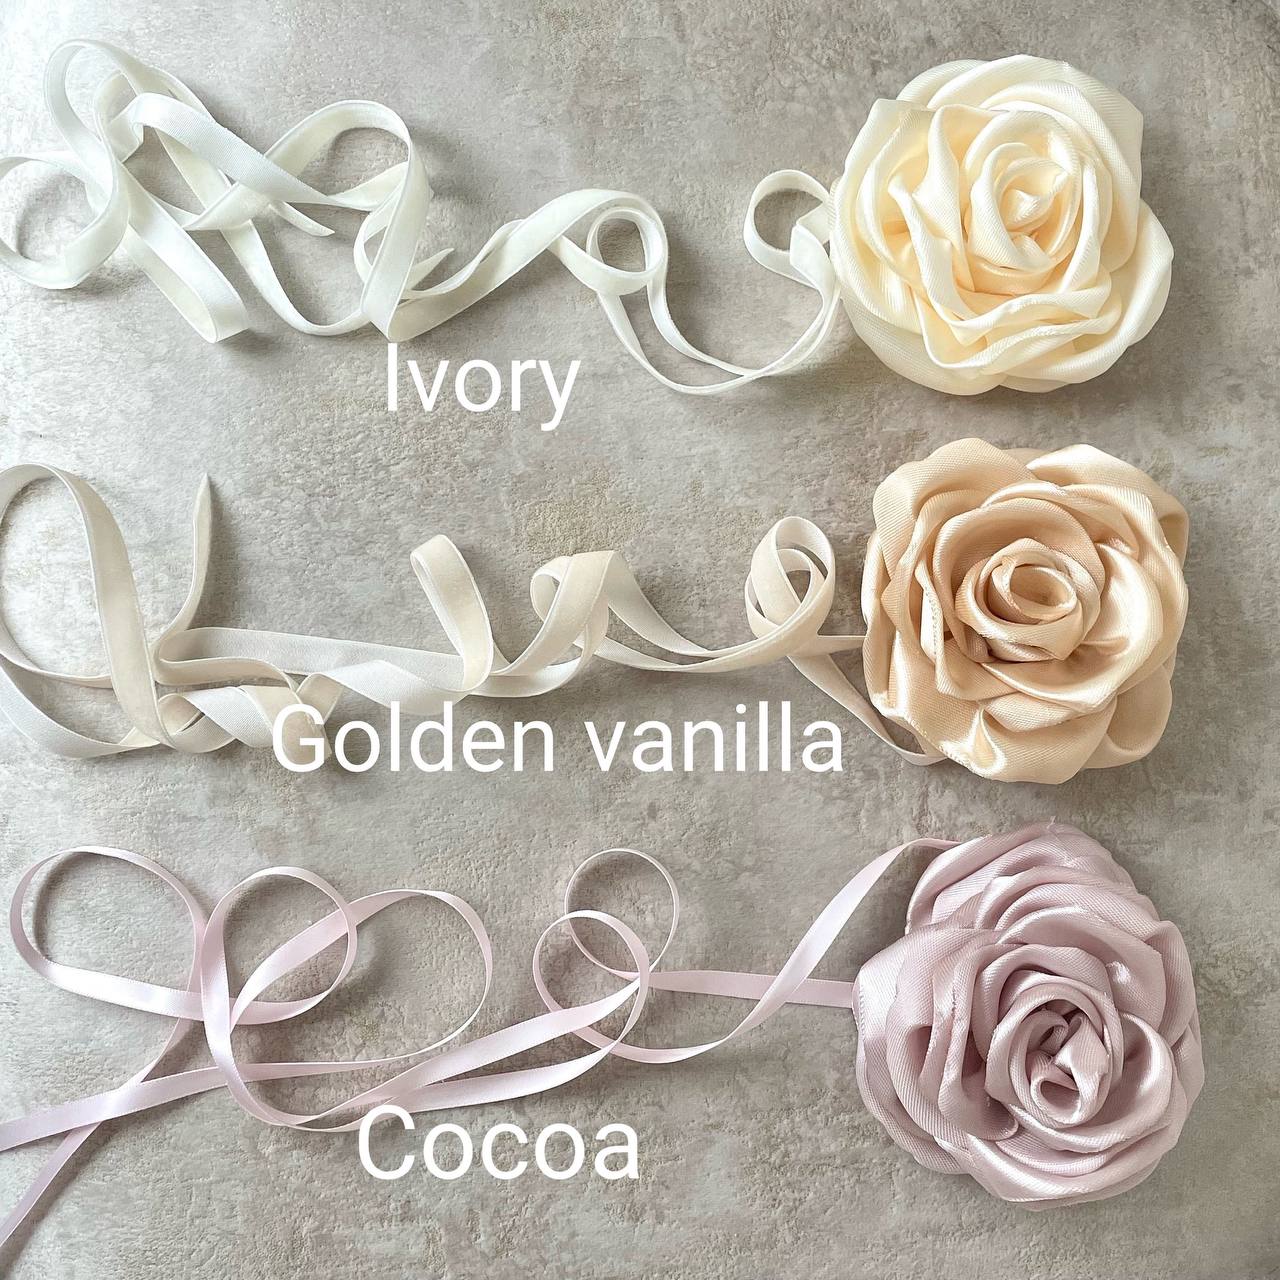 Fantasy Ivory Golden Vanilla Cocoa Flower Choker Dolce Vita